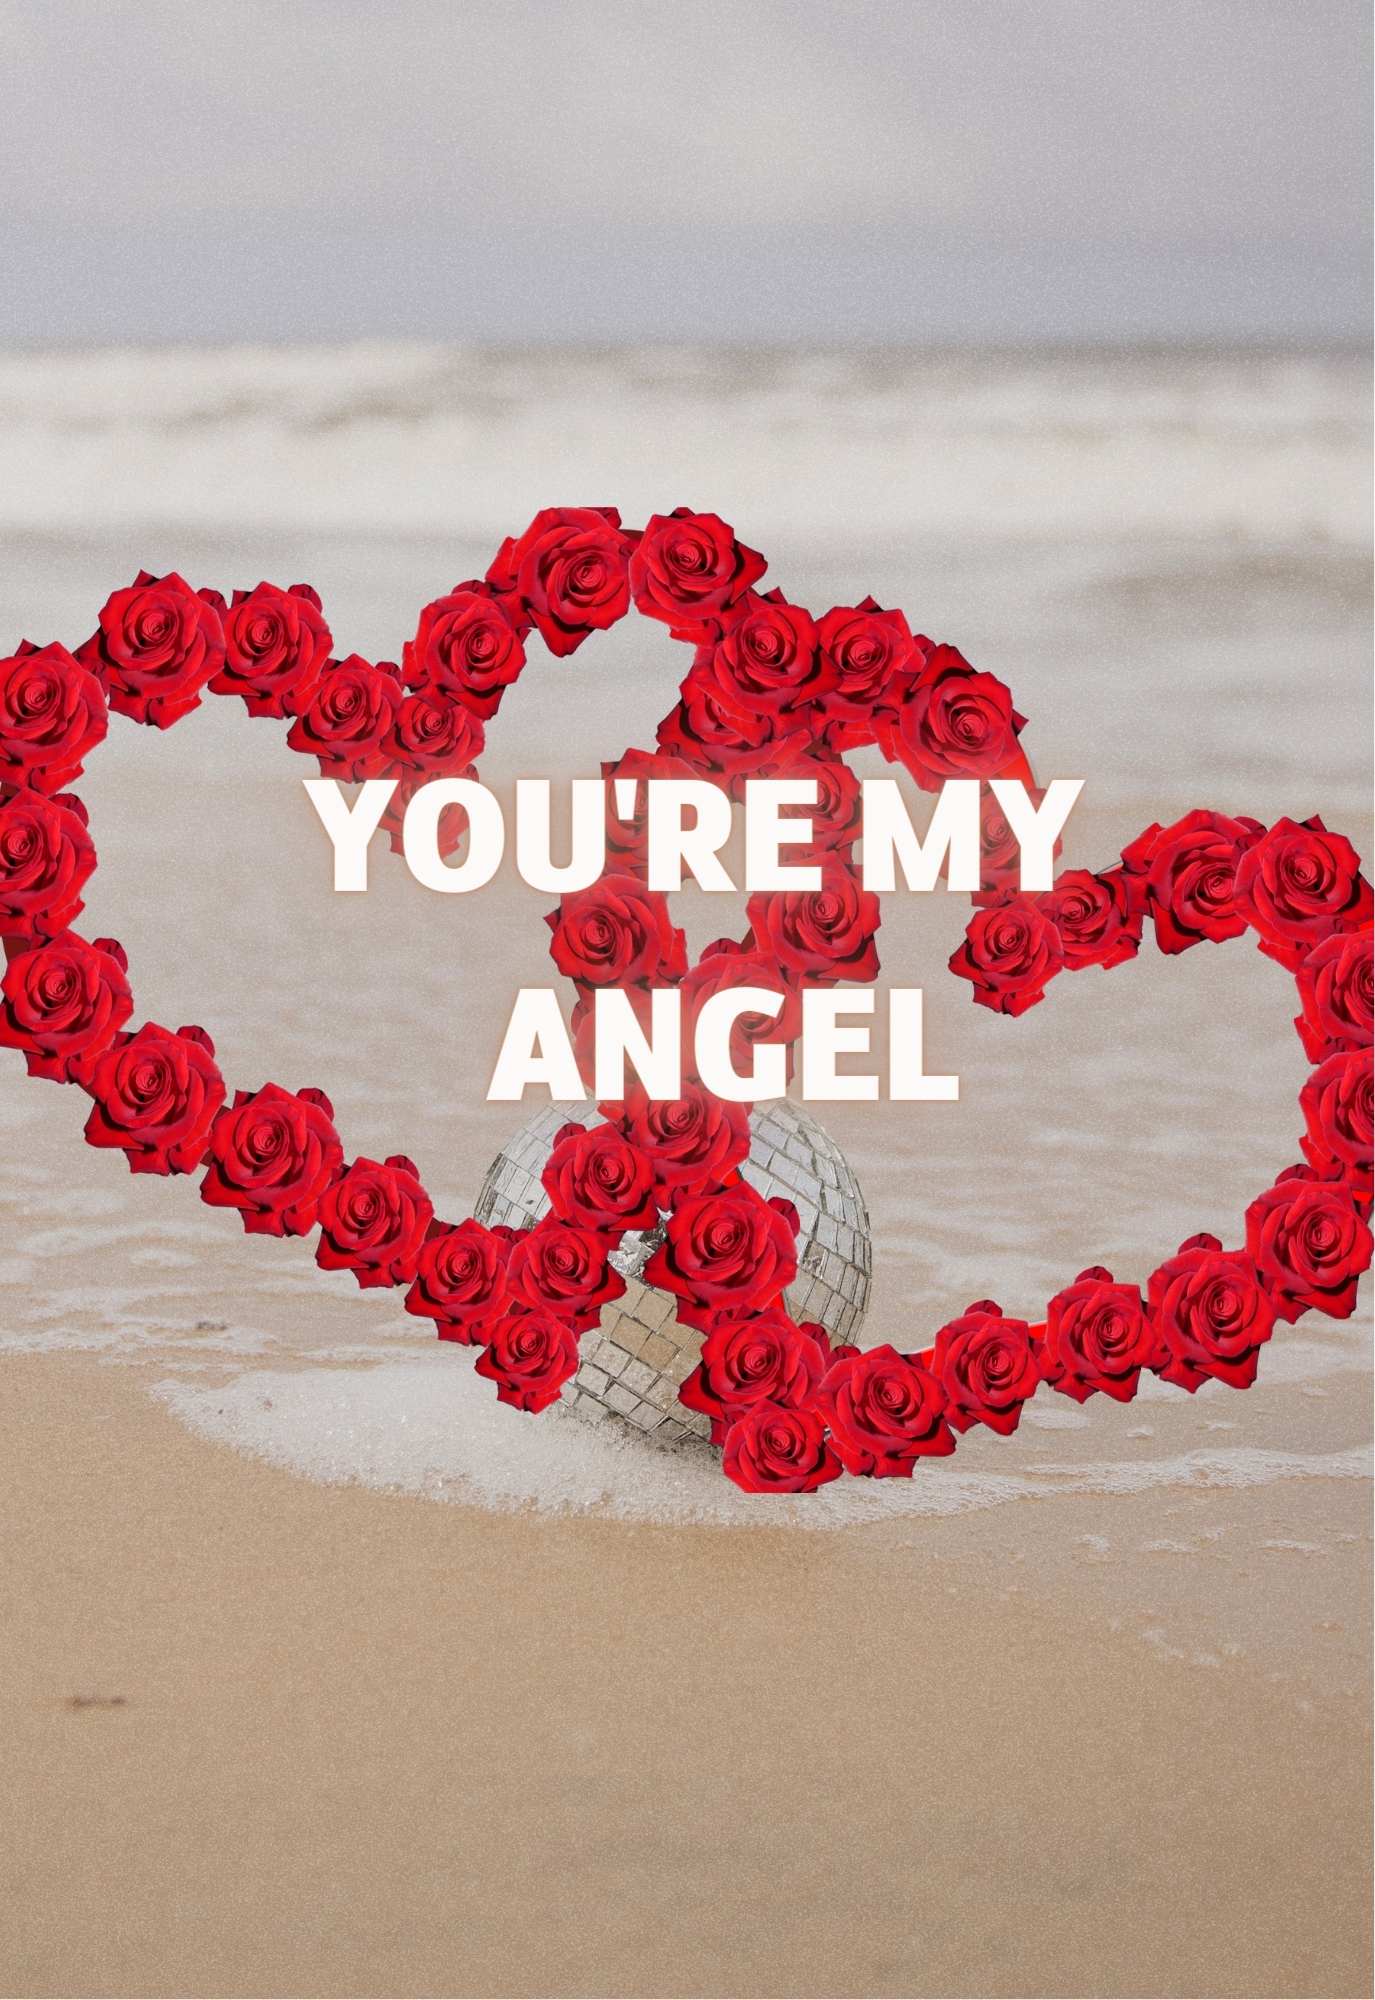 You're my angel (22 × 32 סמ) (1).jpg